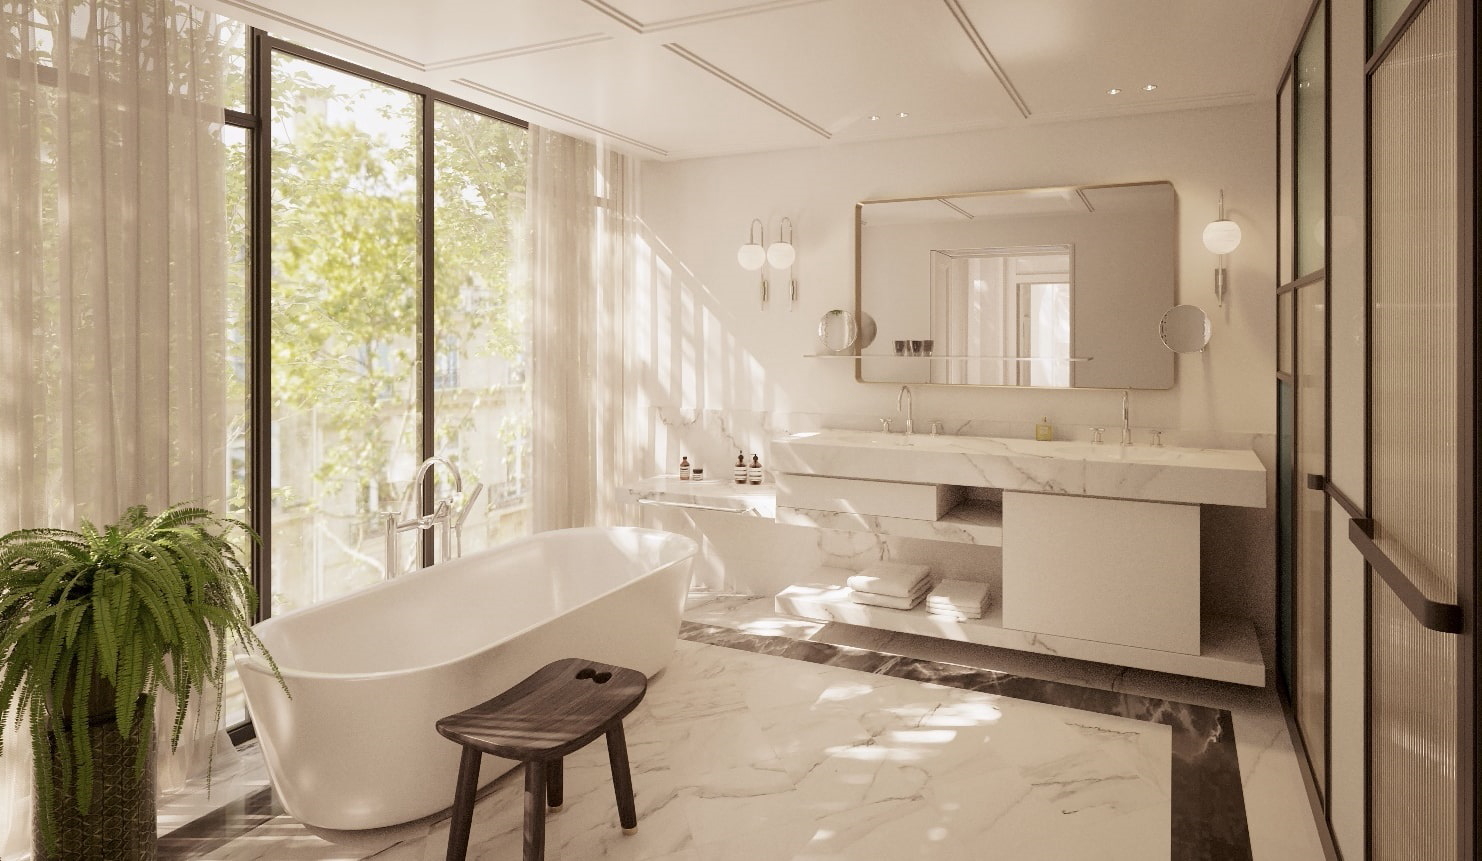 Bathroom of a room at Kimpton St Honoré Paris. Click to enlarge.